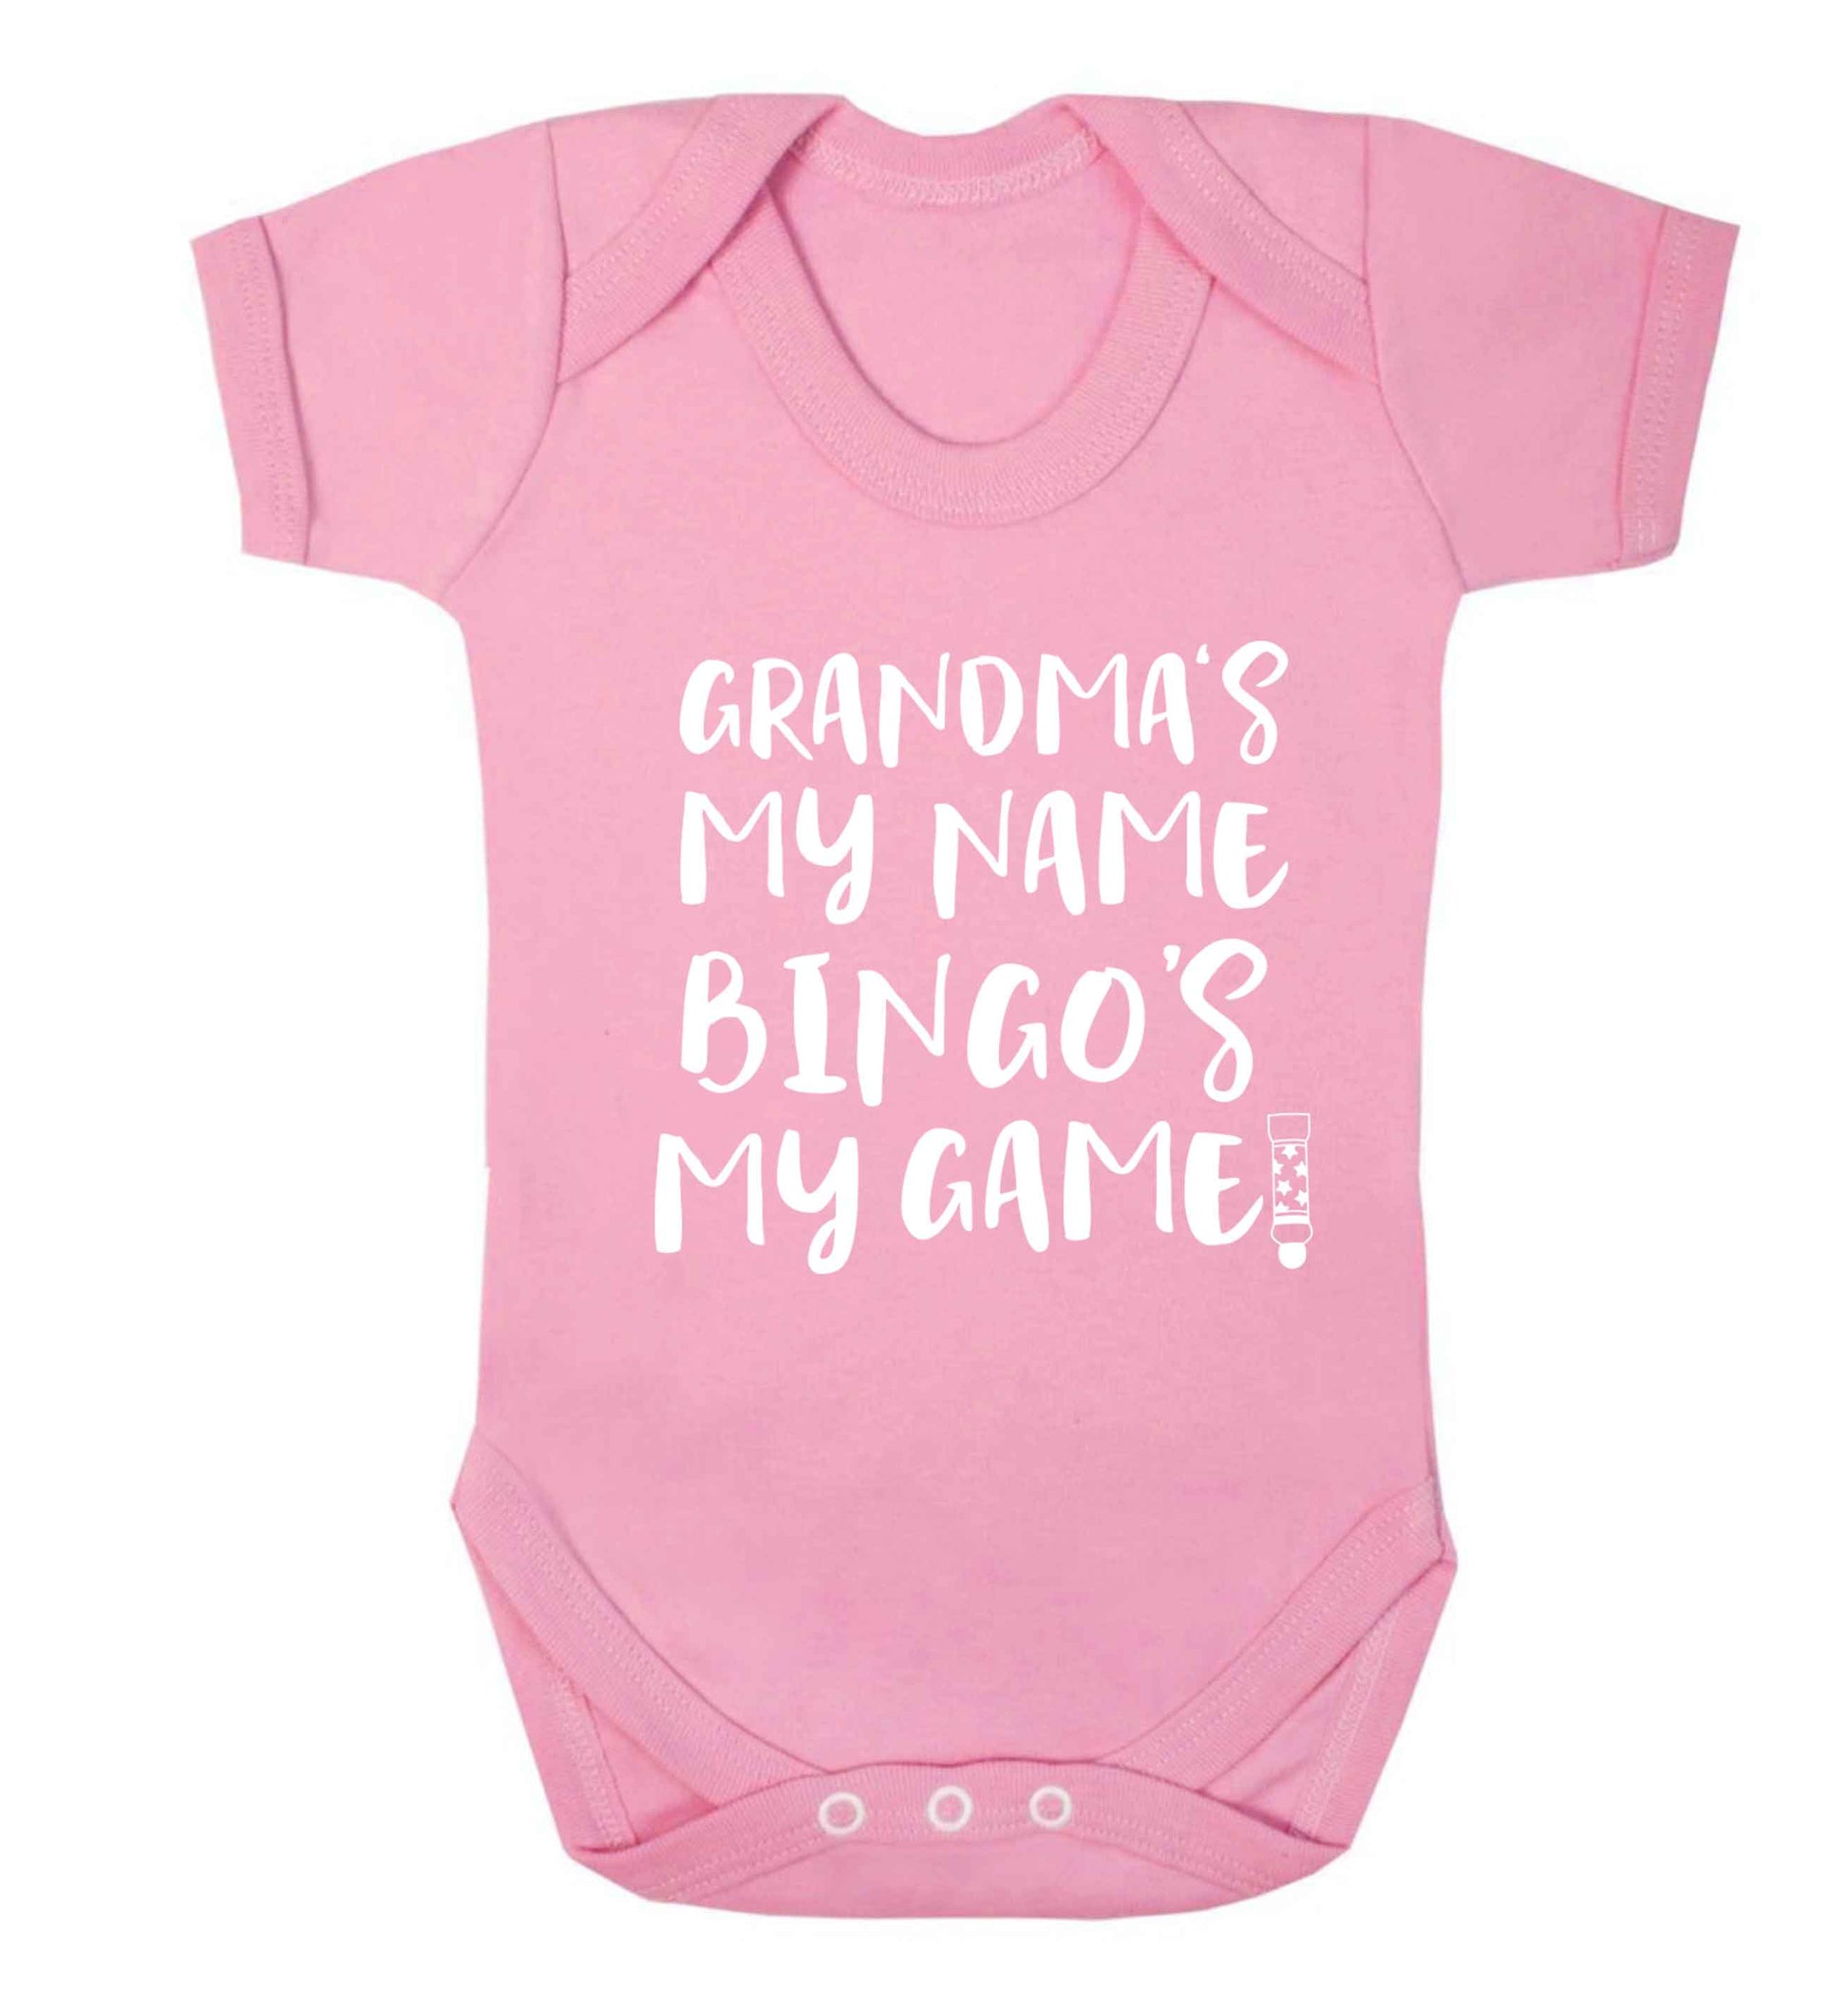 Grandma's my name bingo's my game! Baby Vest pale pink 18-24 months